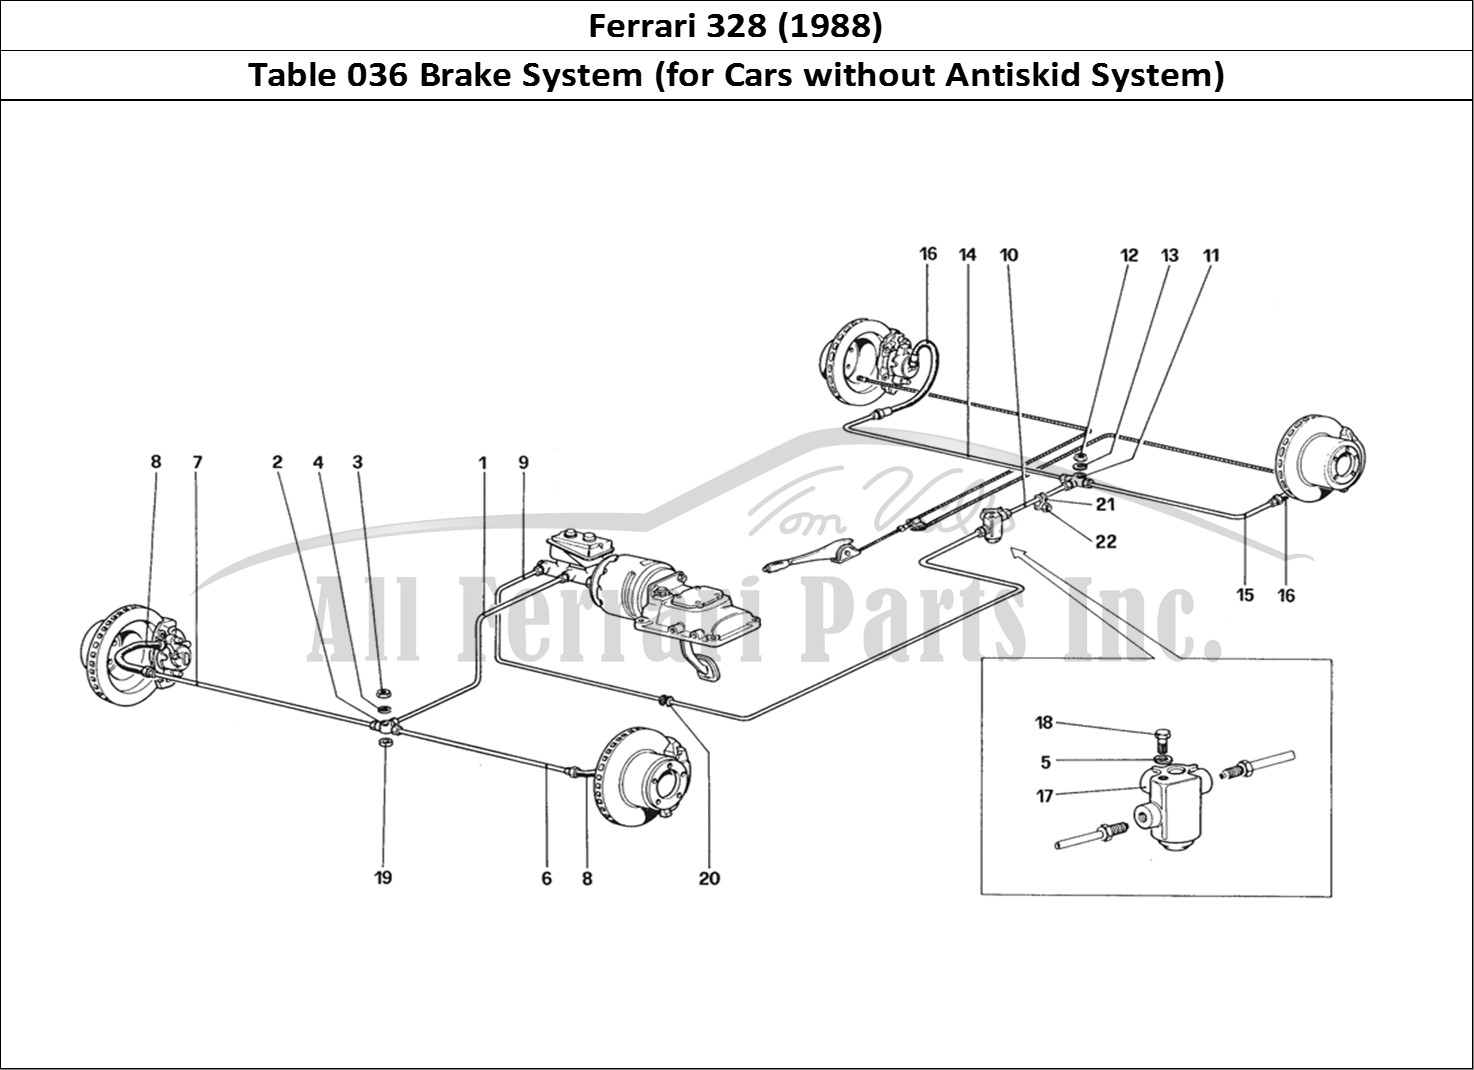 Ferrari Parts Ferrari 328 (1988) Page 036 Brake System (for Car Wit